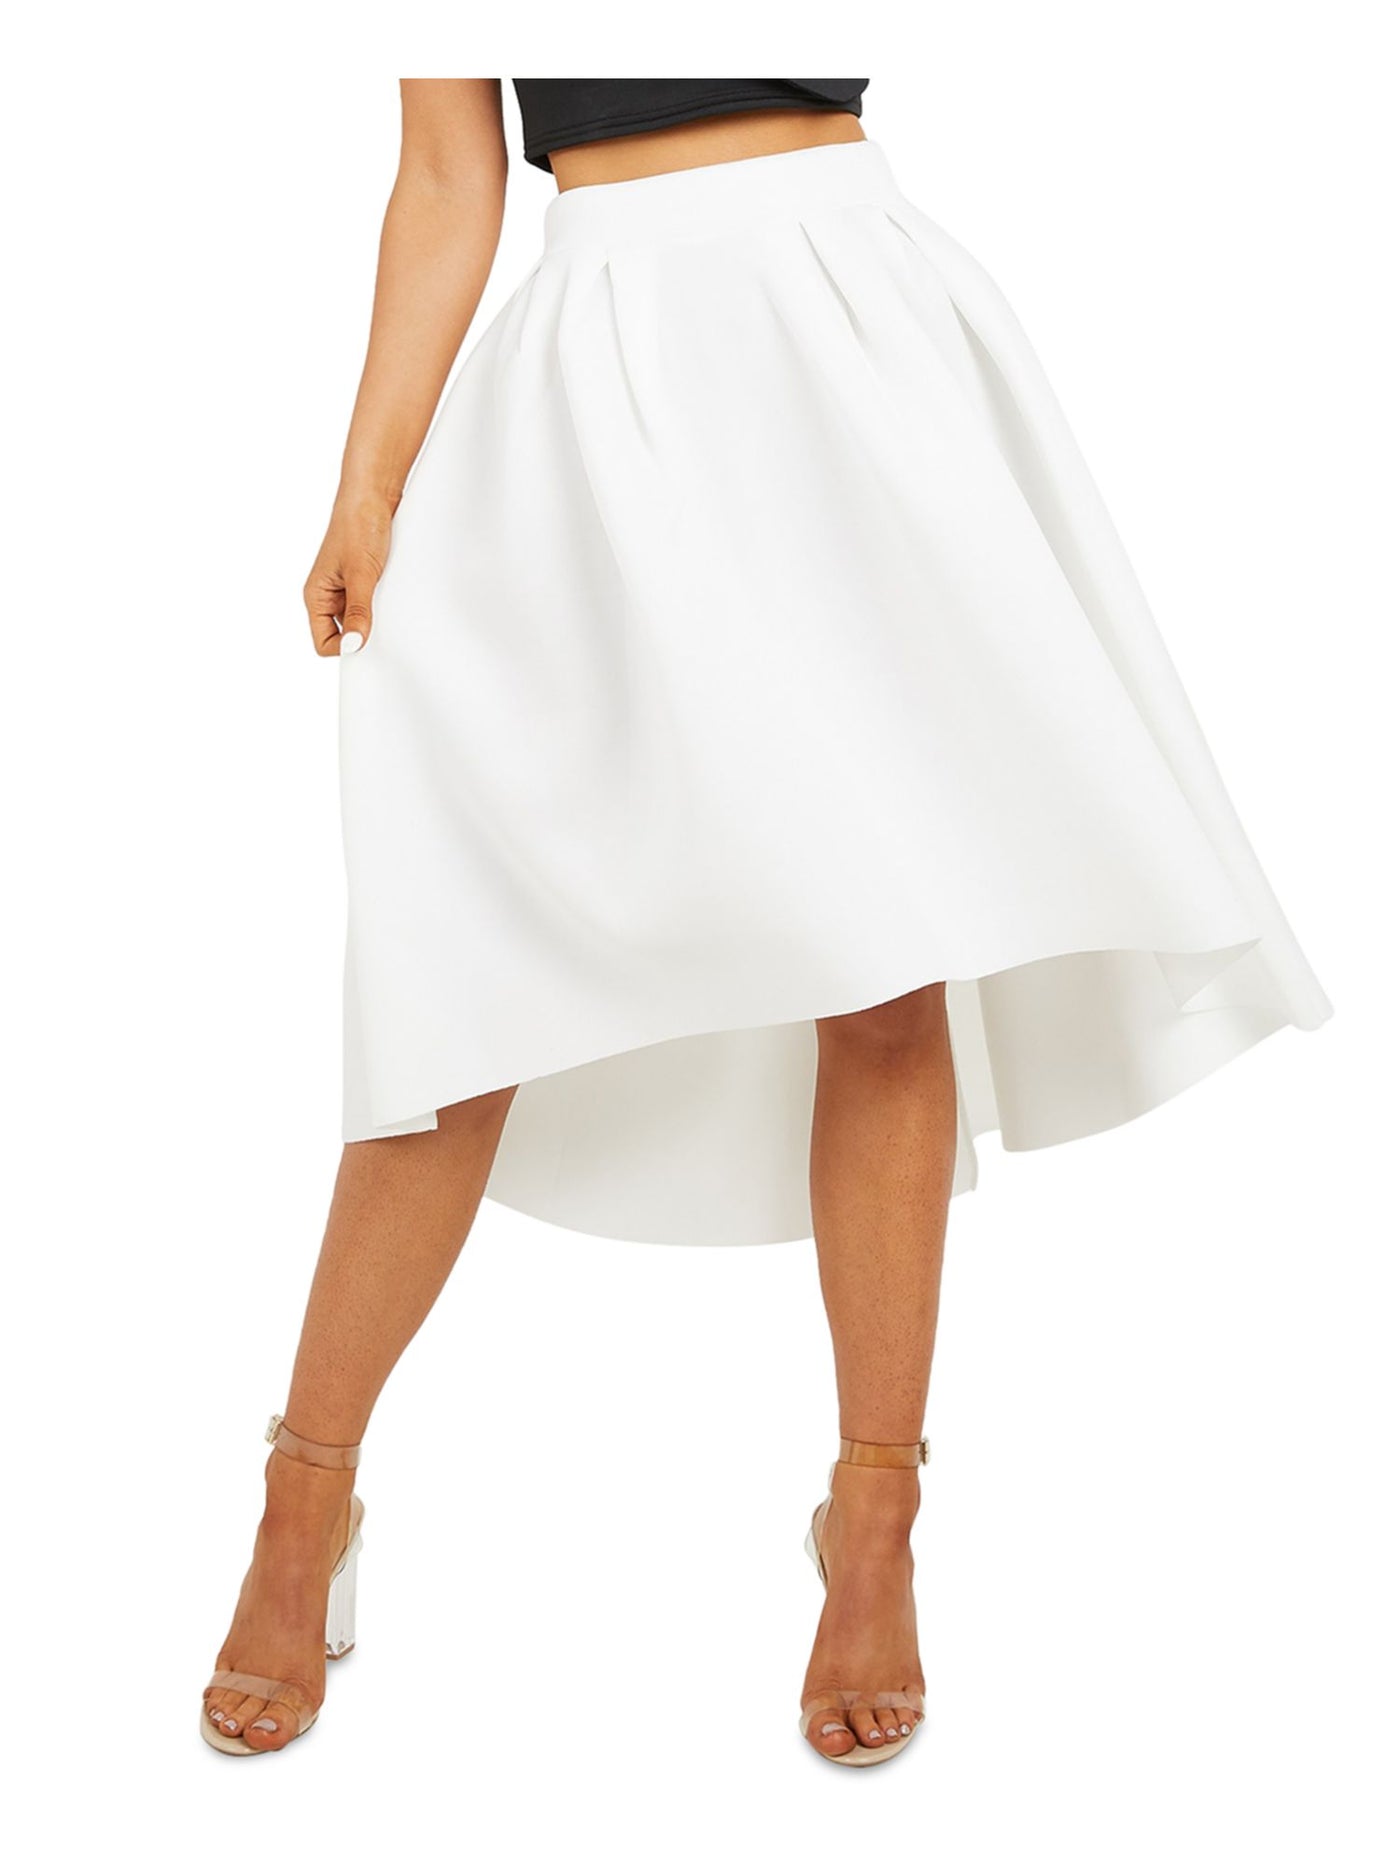 QUIZ Womens White Knee Length Evening Hi-Lo Skirt 4